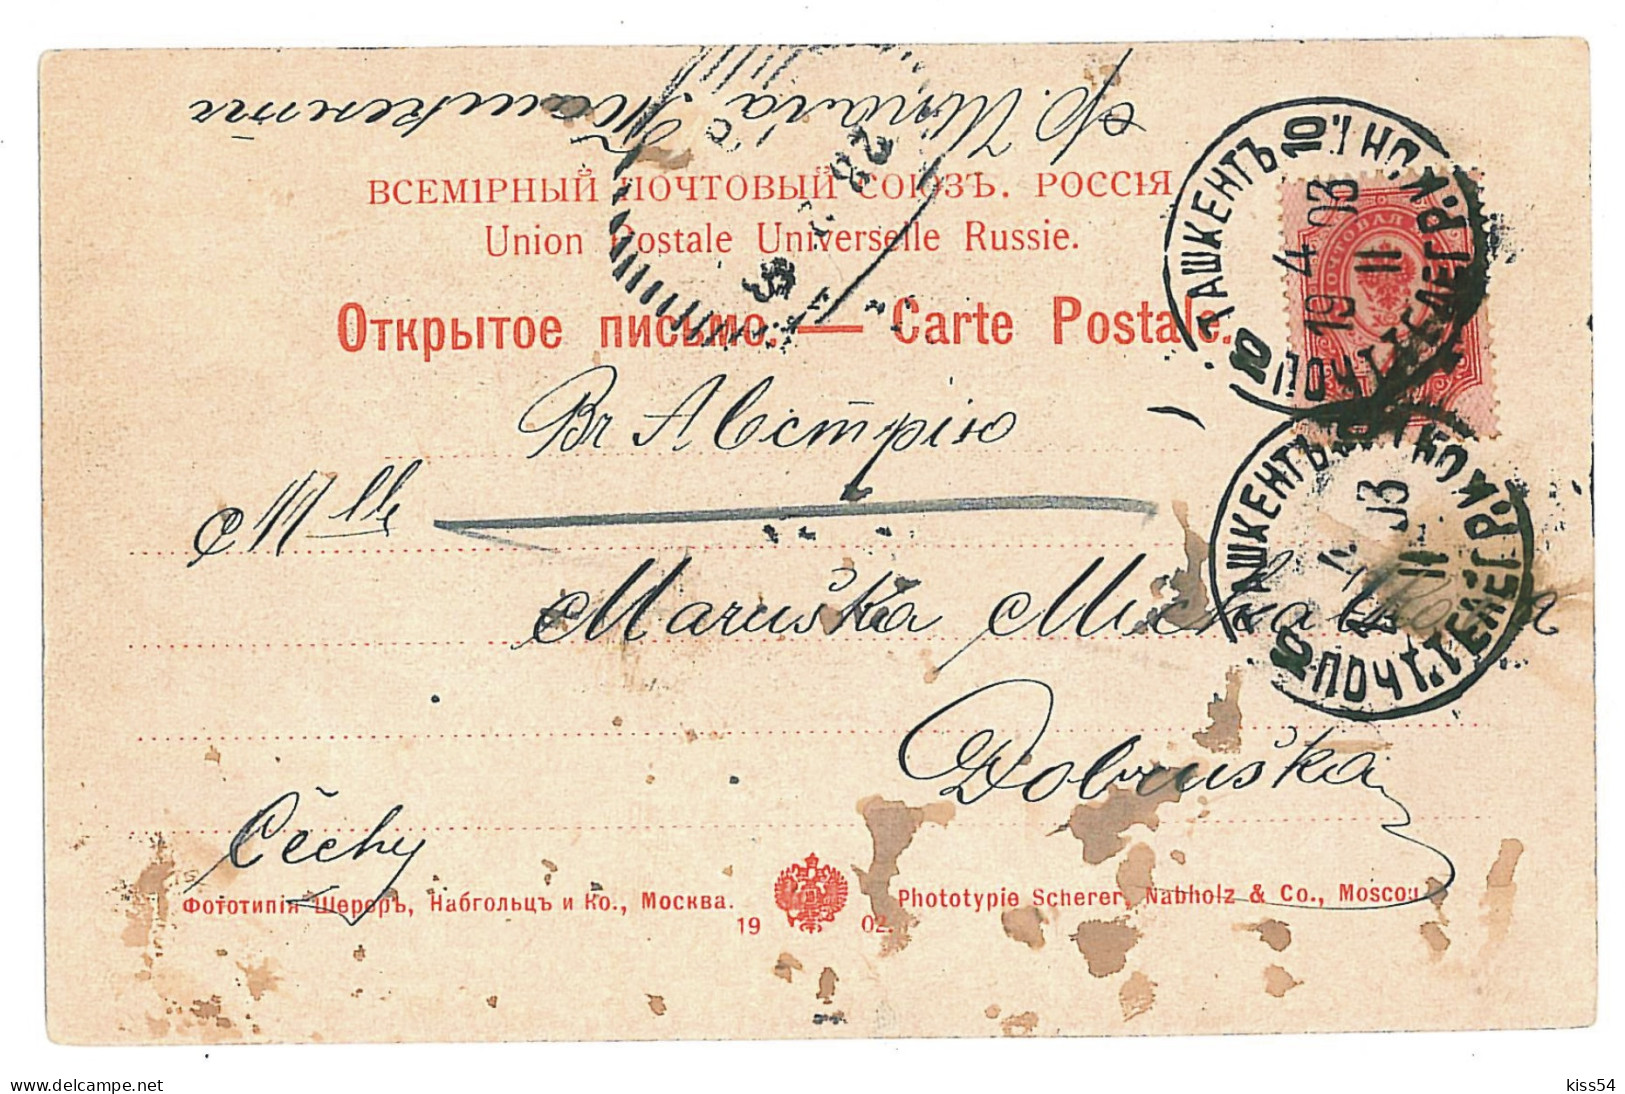 U 11 - 9828 TASHKENT, Uzbekistan, Church - Old Postcard - Used - 1903 - Ouzbékistan